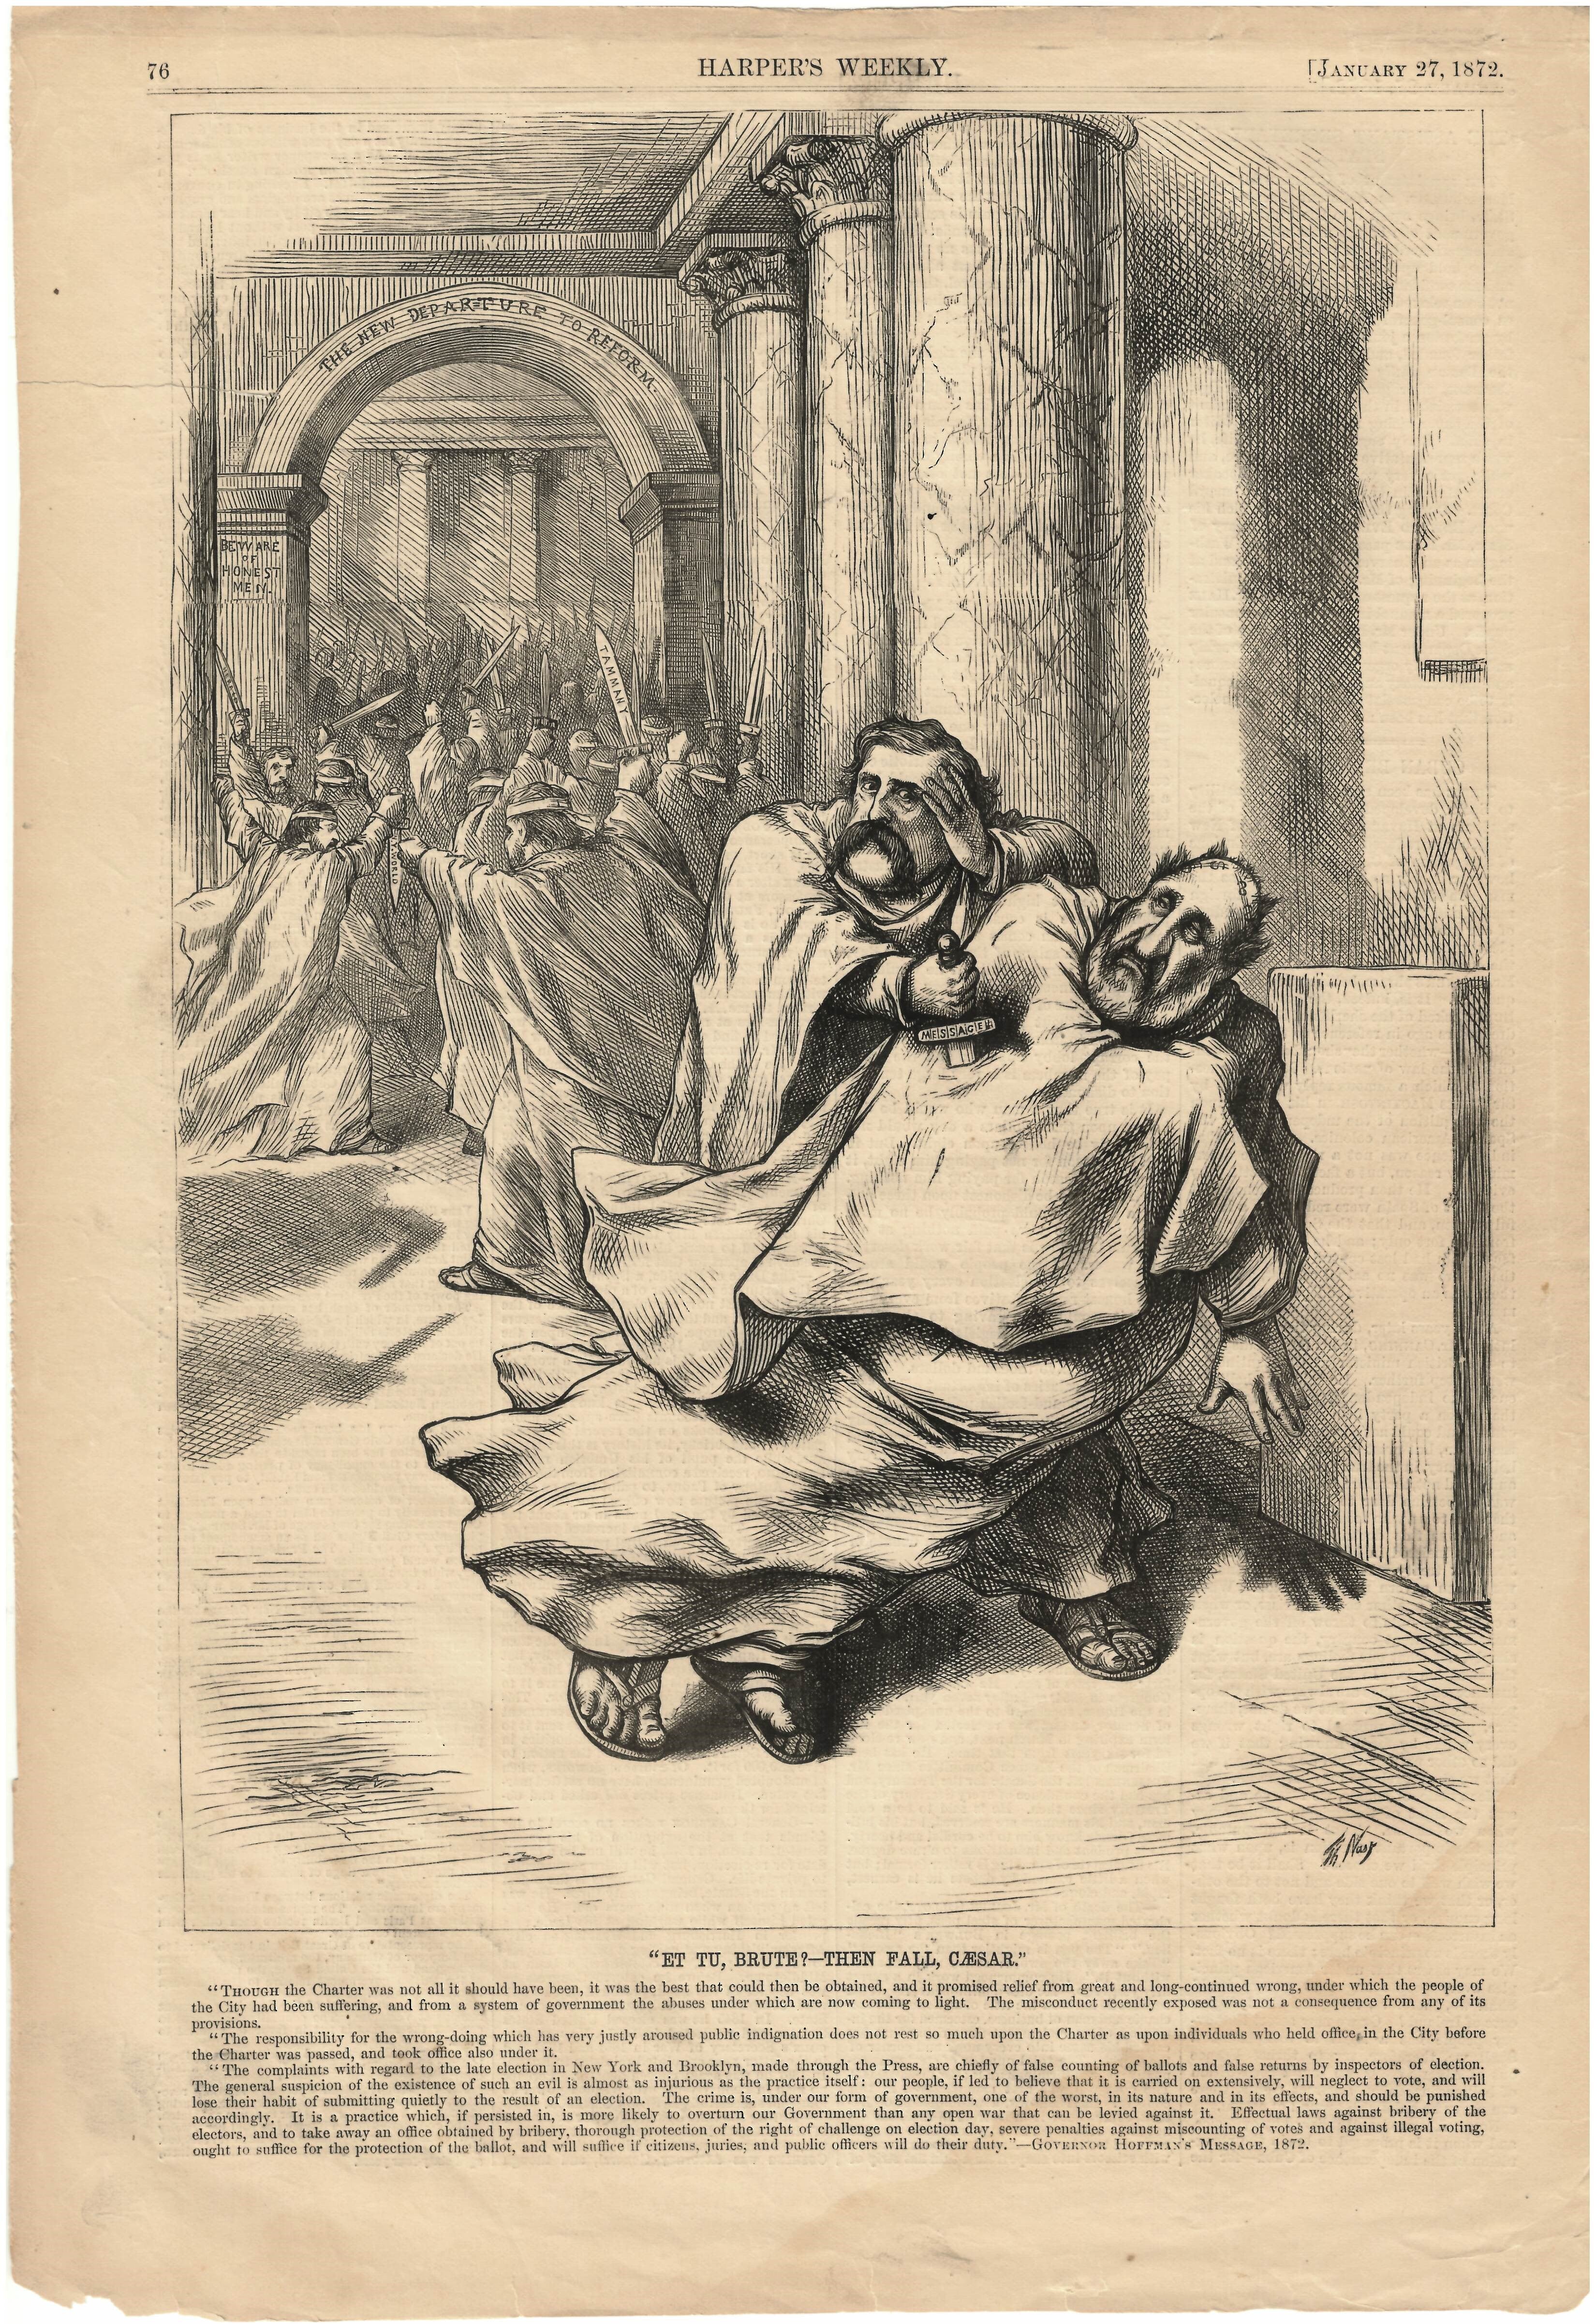 Harper's Weekly January 27, 1872 "Et Tu Brute? - Then Fall Cæsar" Ad Print